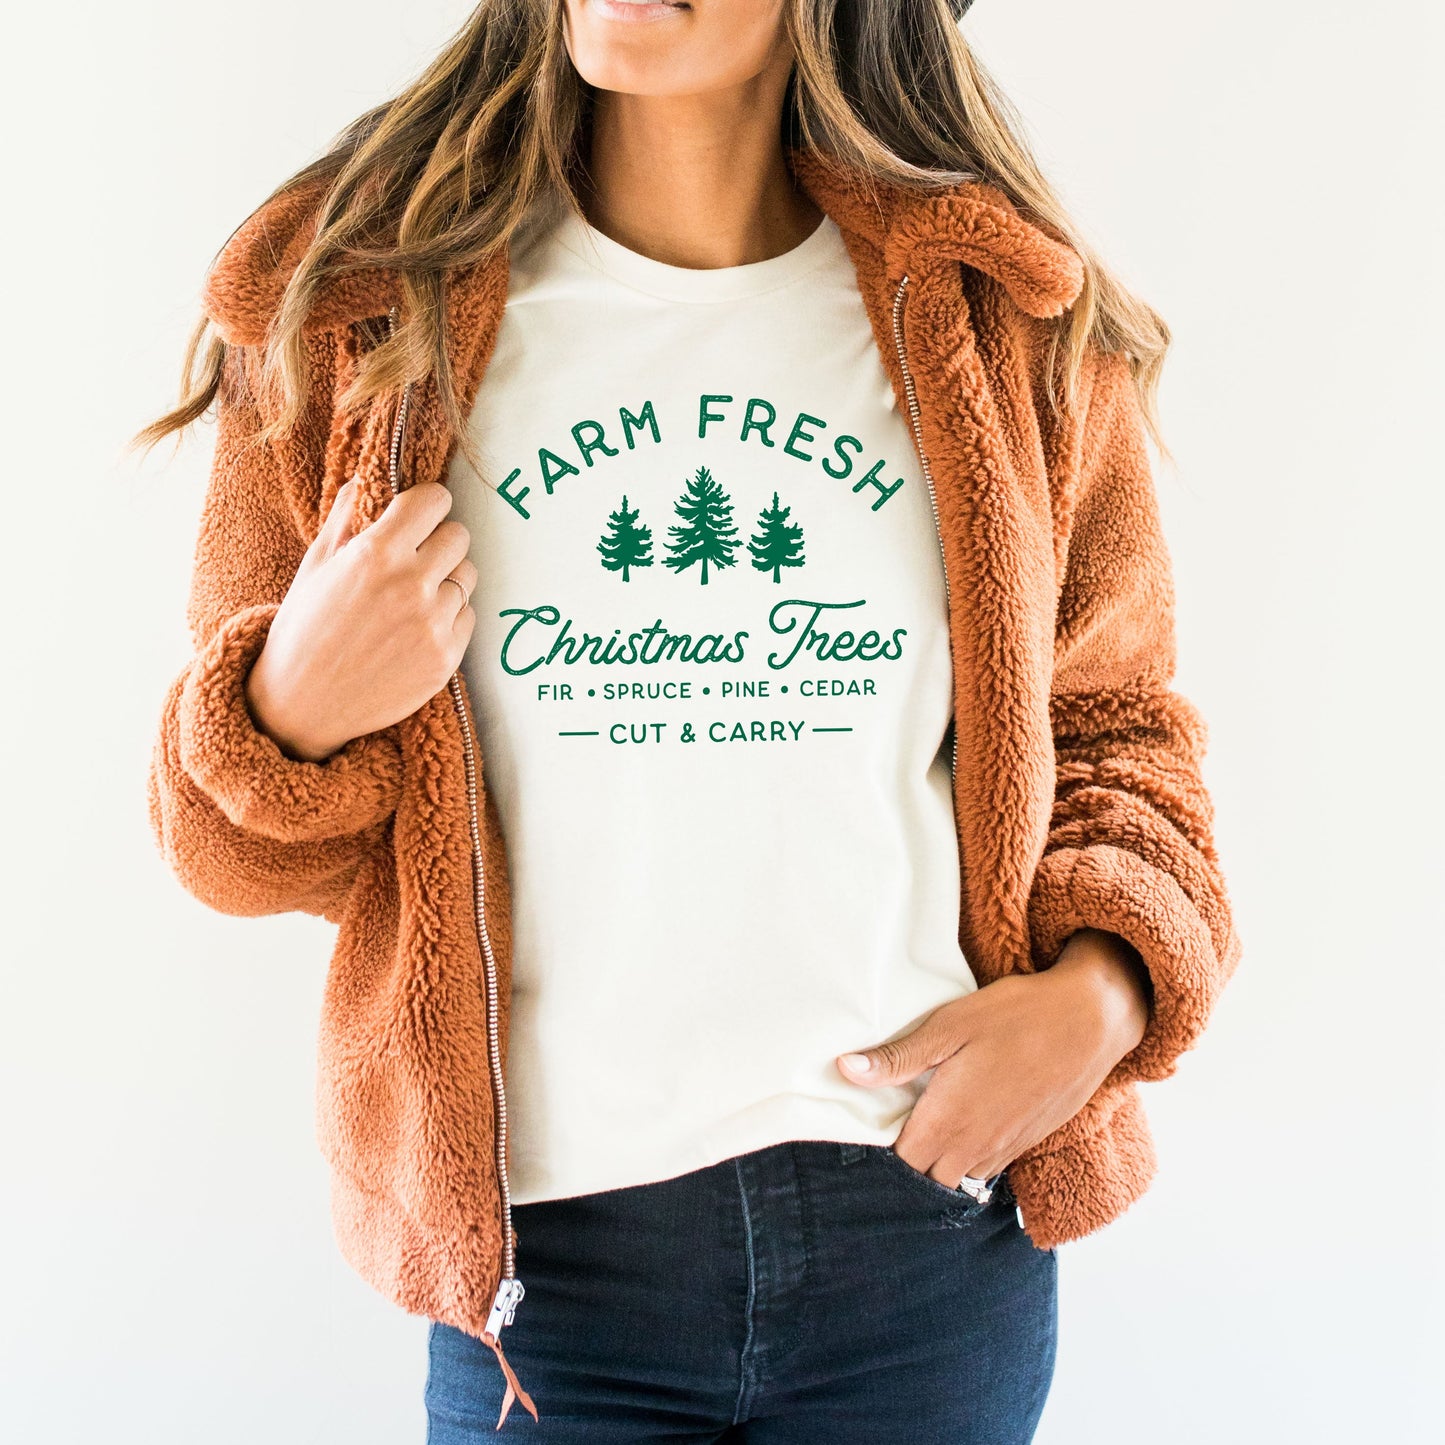 Clearance Farm Fresh Christmas Trees | Short Sleeve Graphic Tee